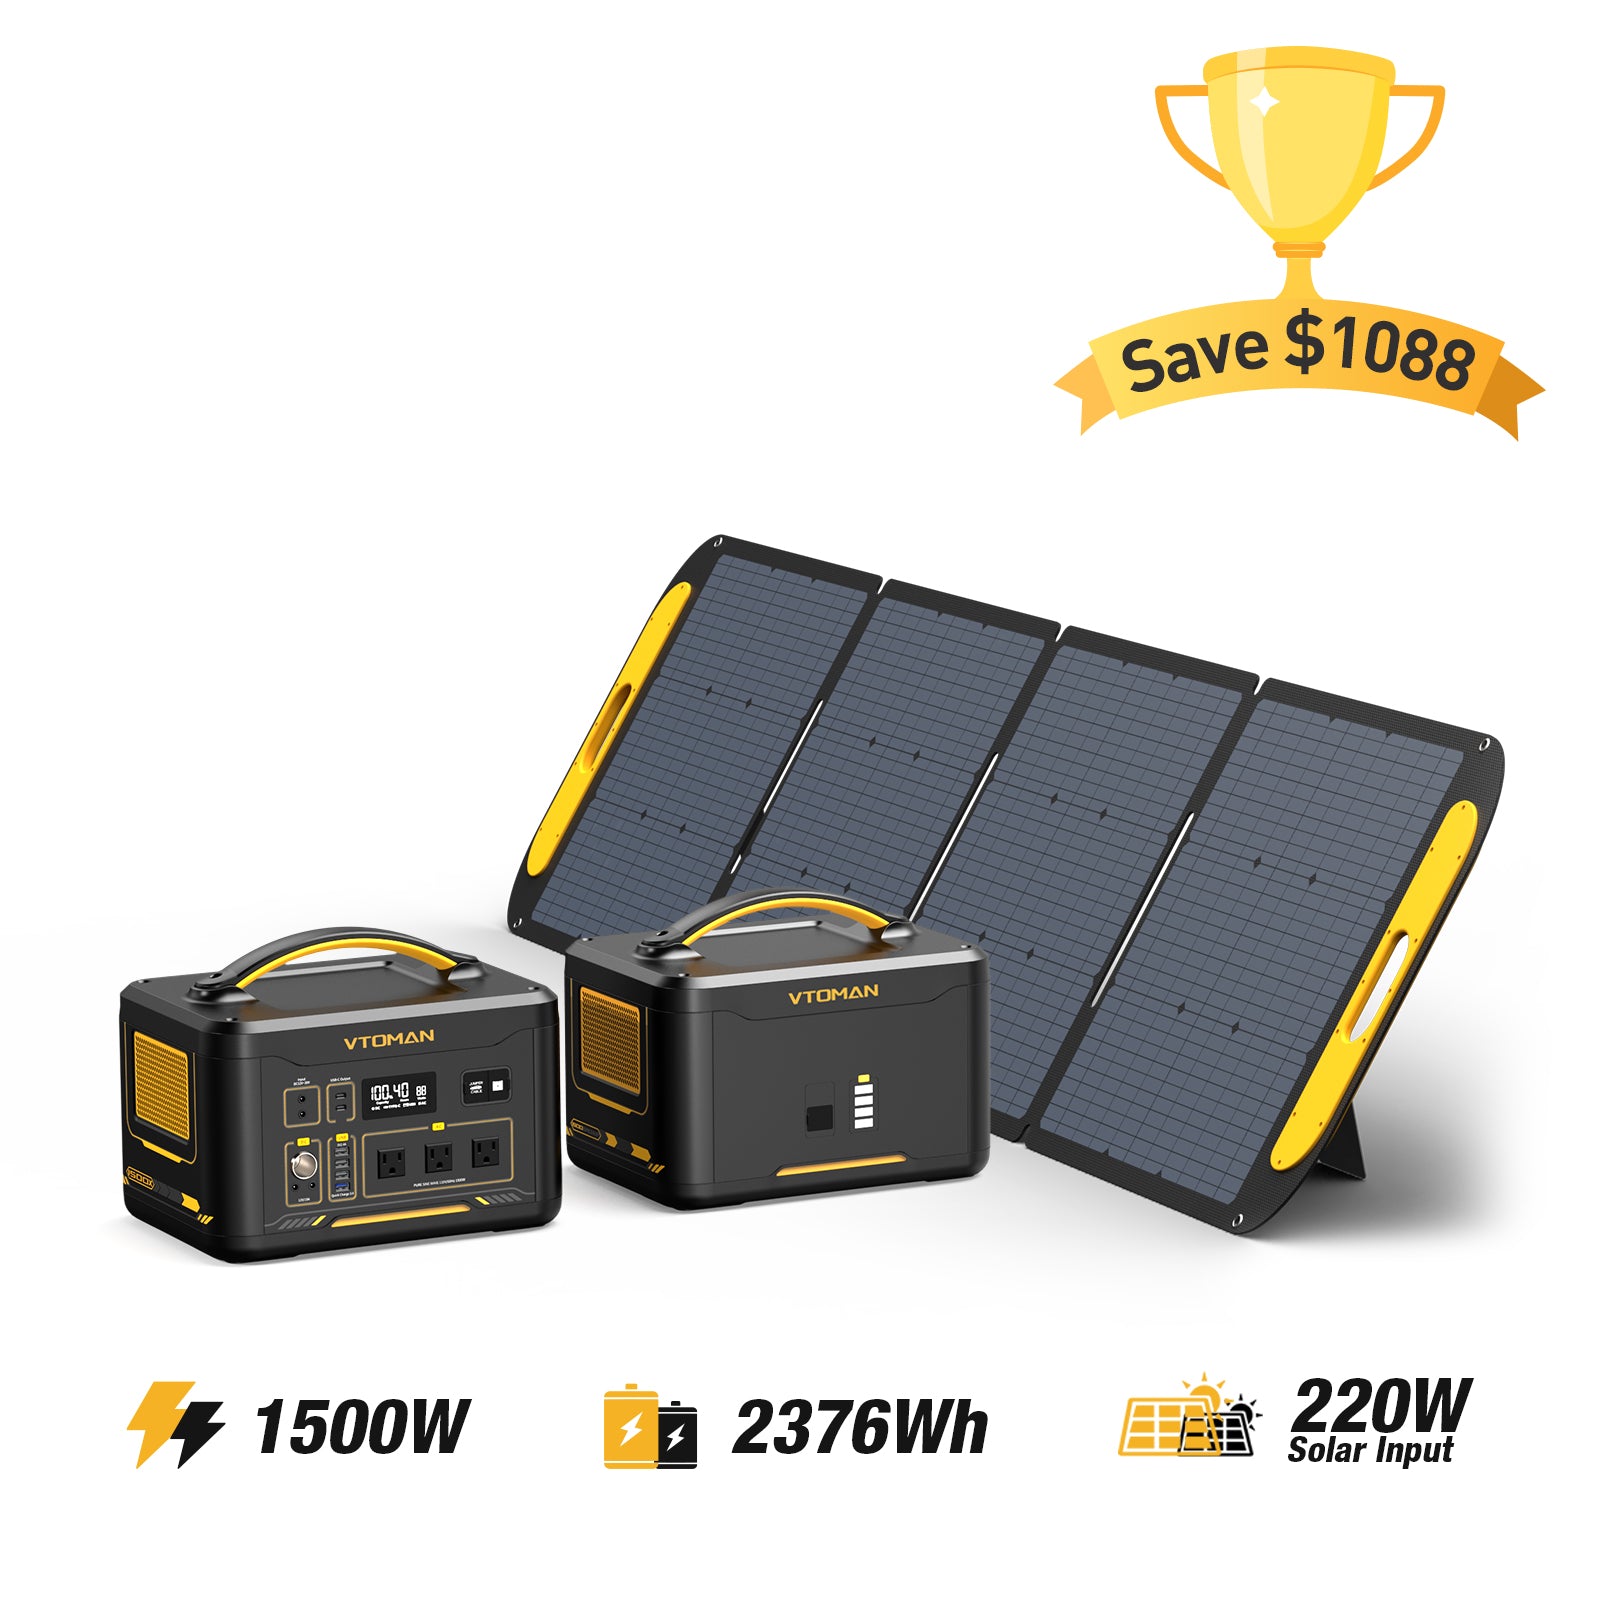 Jump 1500W/2376Wh 220W Solar Generator